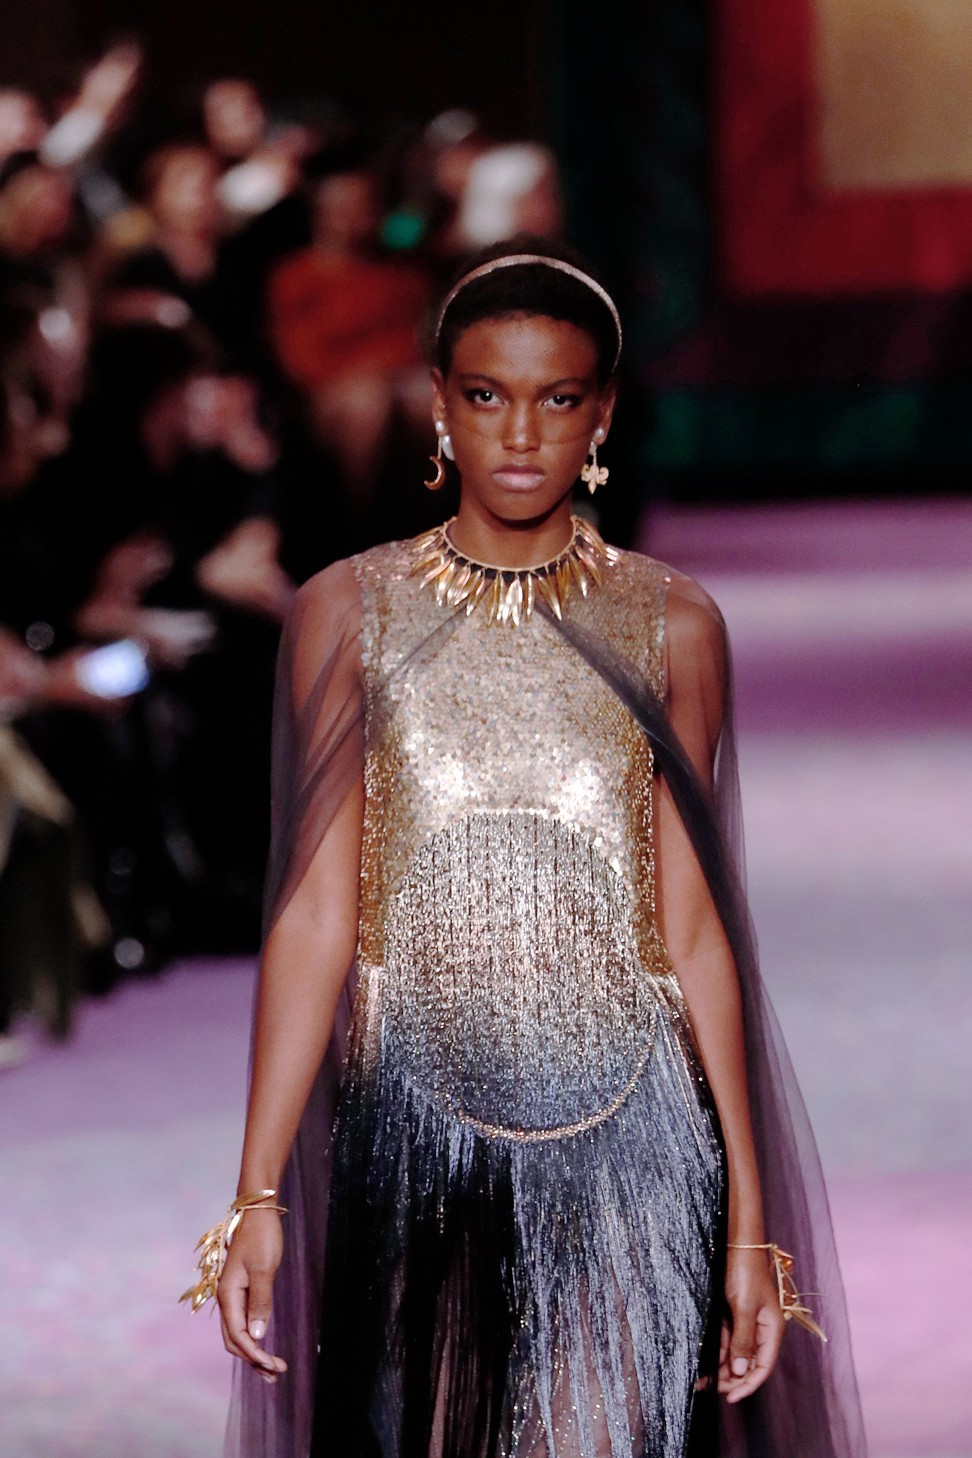 Paris Fashion Week: Dior’s women rule the world – which pleases ...